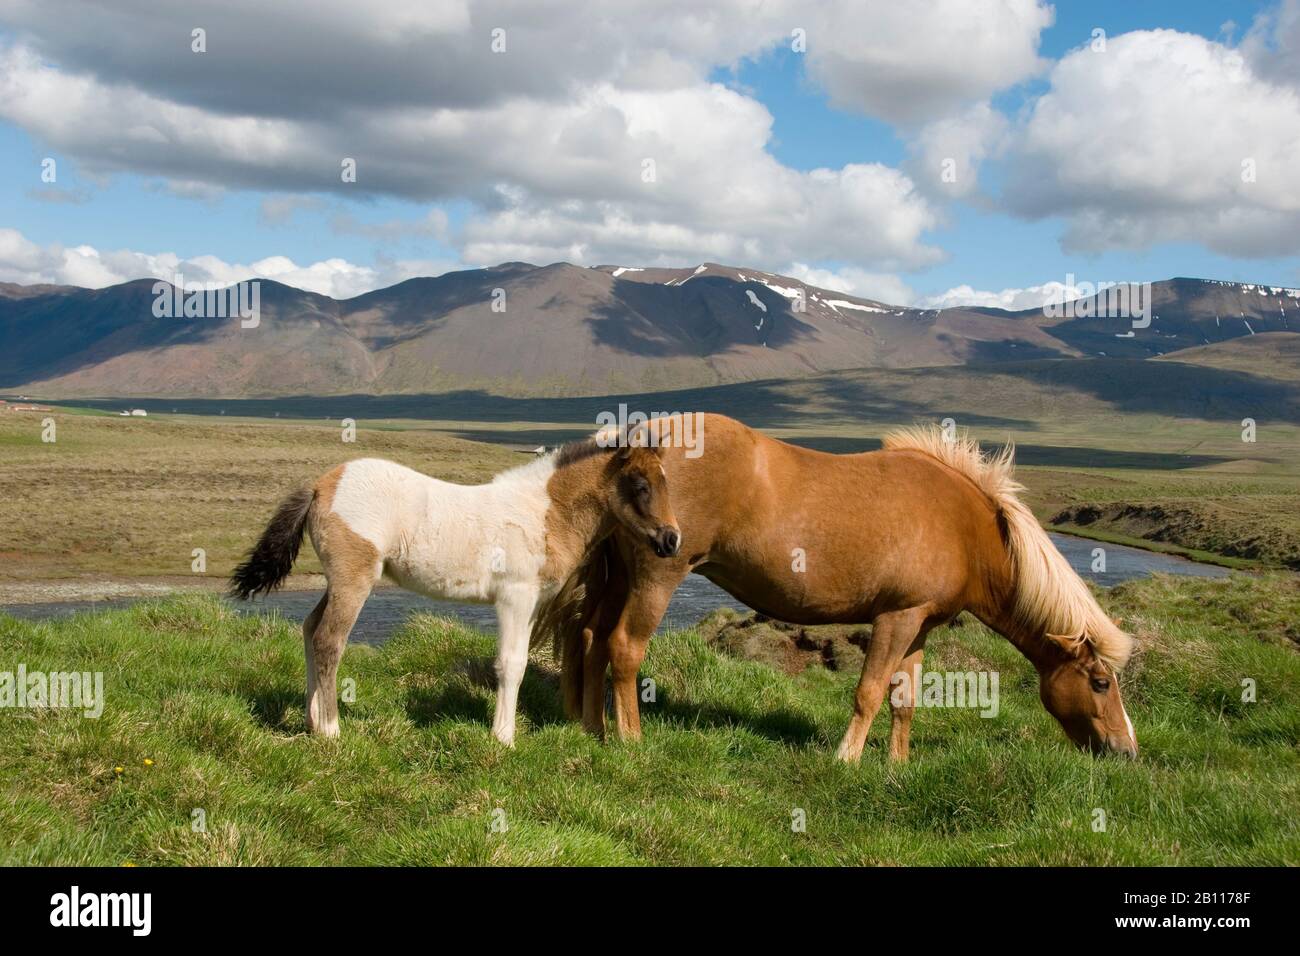 Cheval islandique, cheval islandais, poney islandais (Equus przewalskii F. cavallus), mare avec foal, Islande Banque D'Images